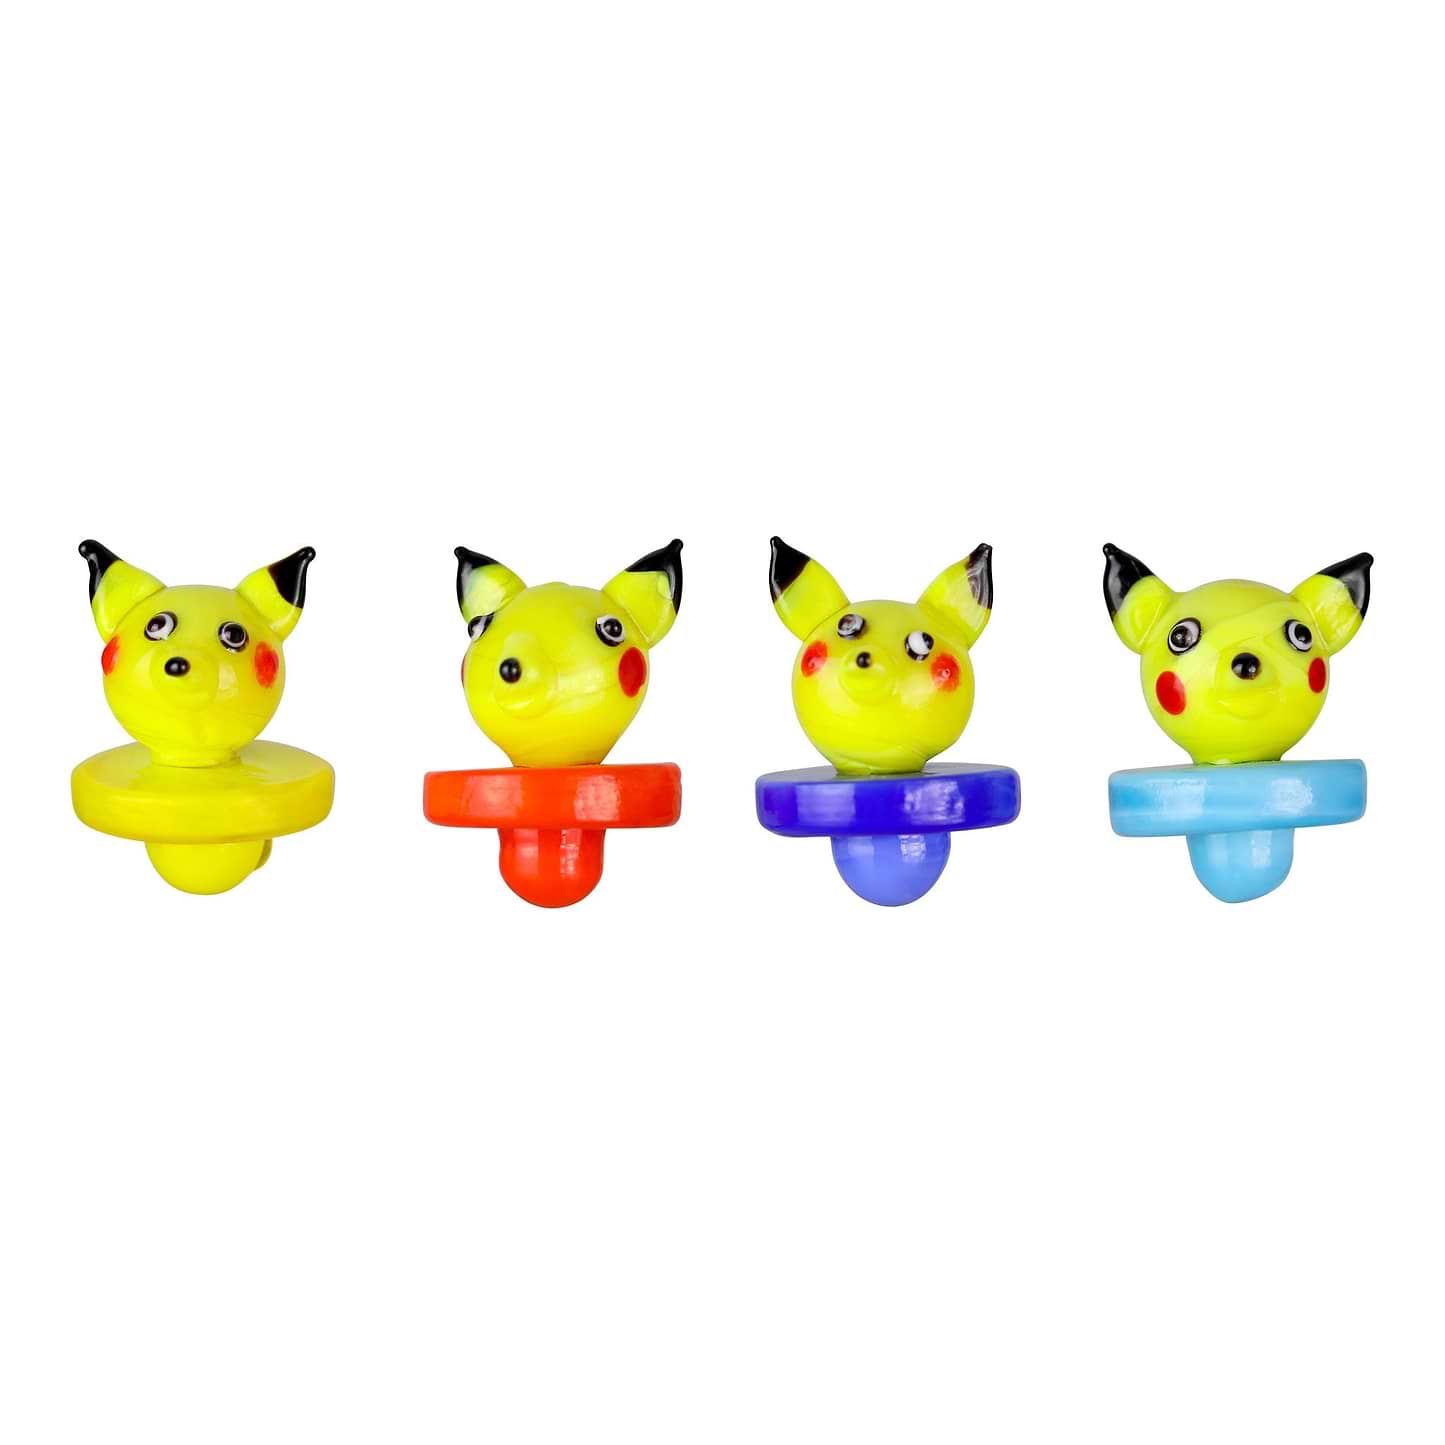 Disoriented Pikachu Carb Cap